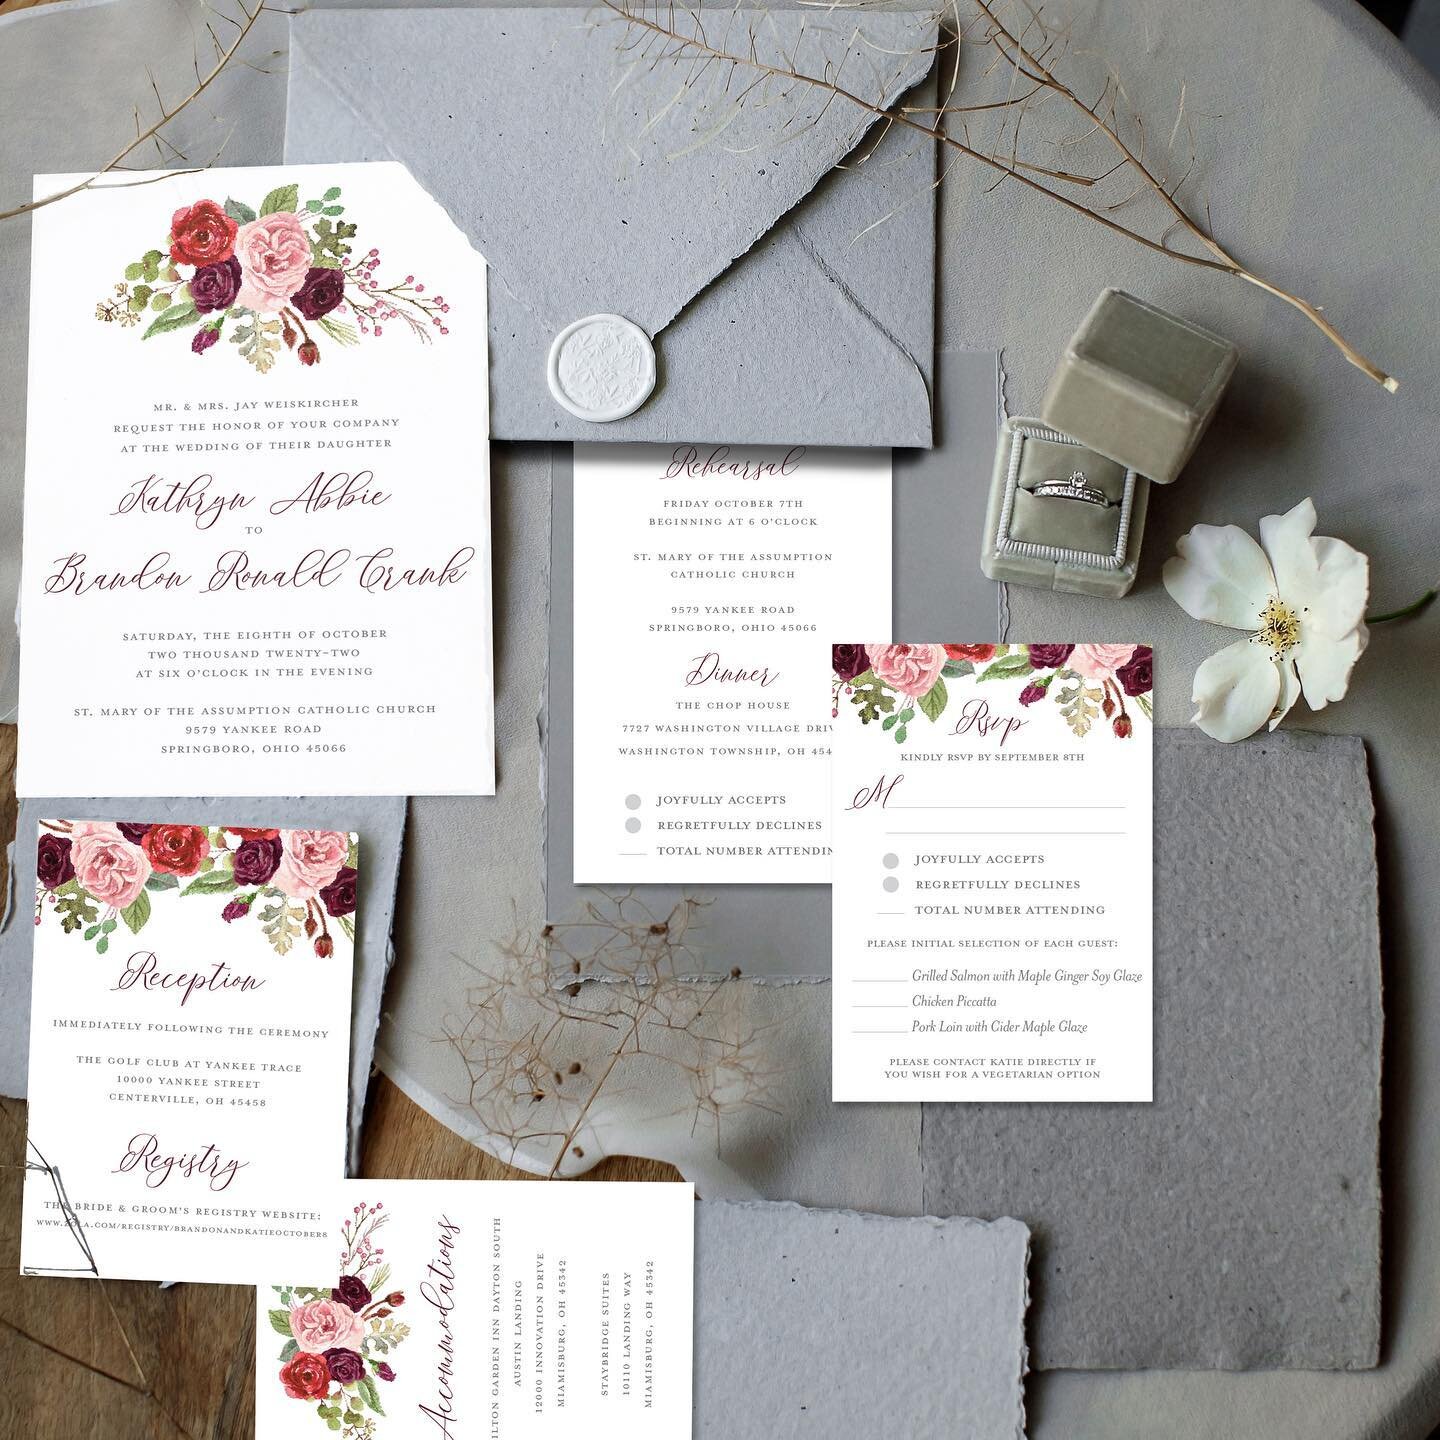 Wedding invitations 🤍
&bull;
&bull;

#wedding #bride #design #cincinnati #ohio #cincinnatiwedding #graphicdesign #invites #invitations #weddinginspiration #weddinginvitations